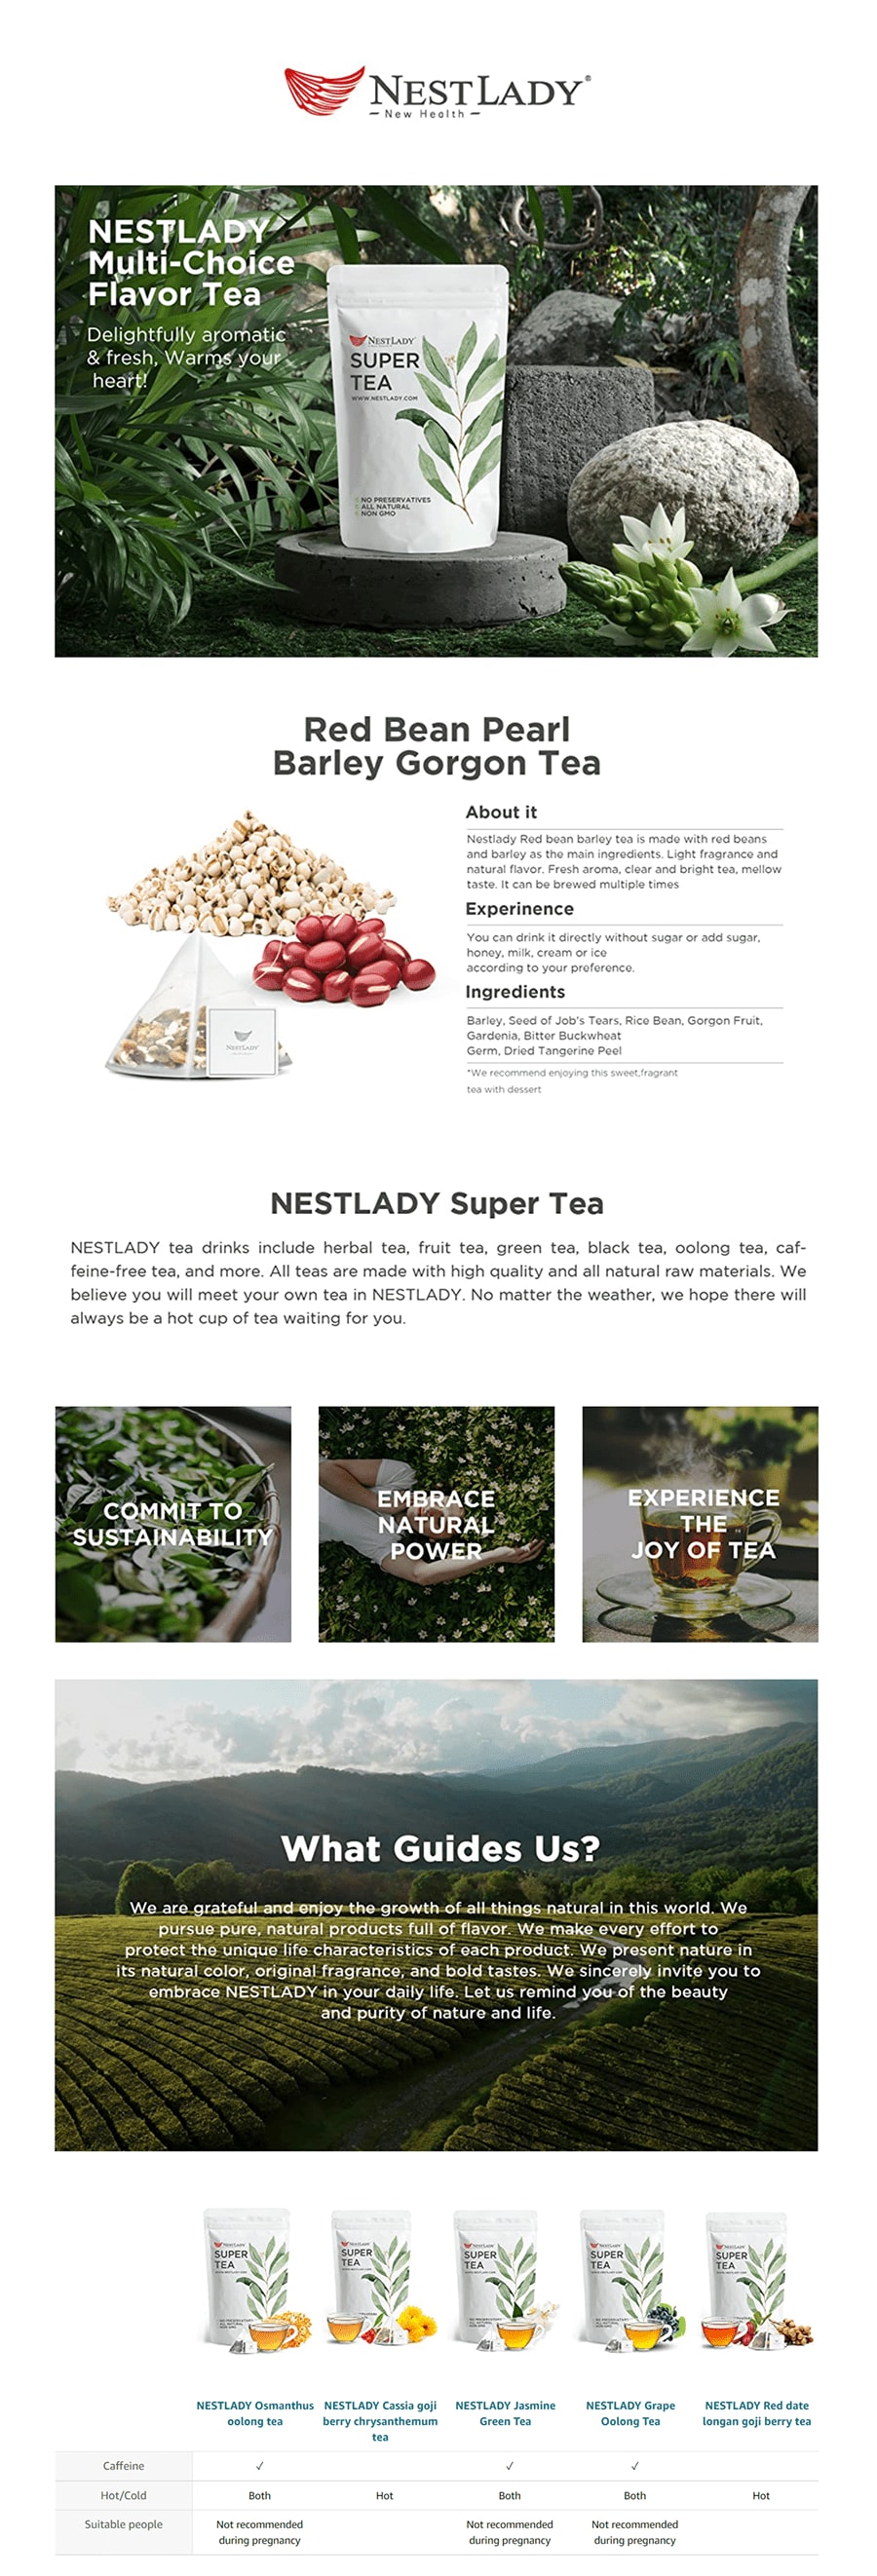 NESTLADY 紅豆薏米茶 滋養茶包20袋 熱銷款式【祛濕健脾】